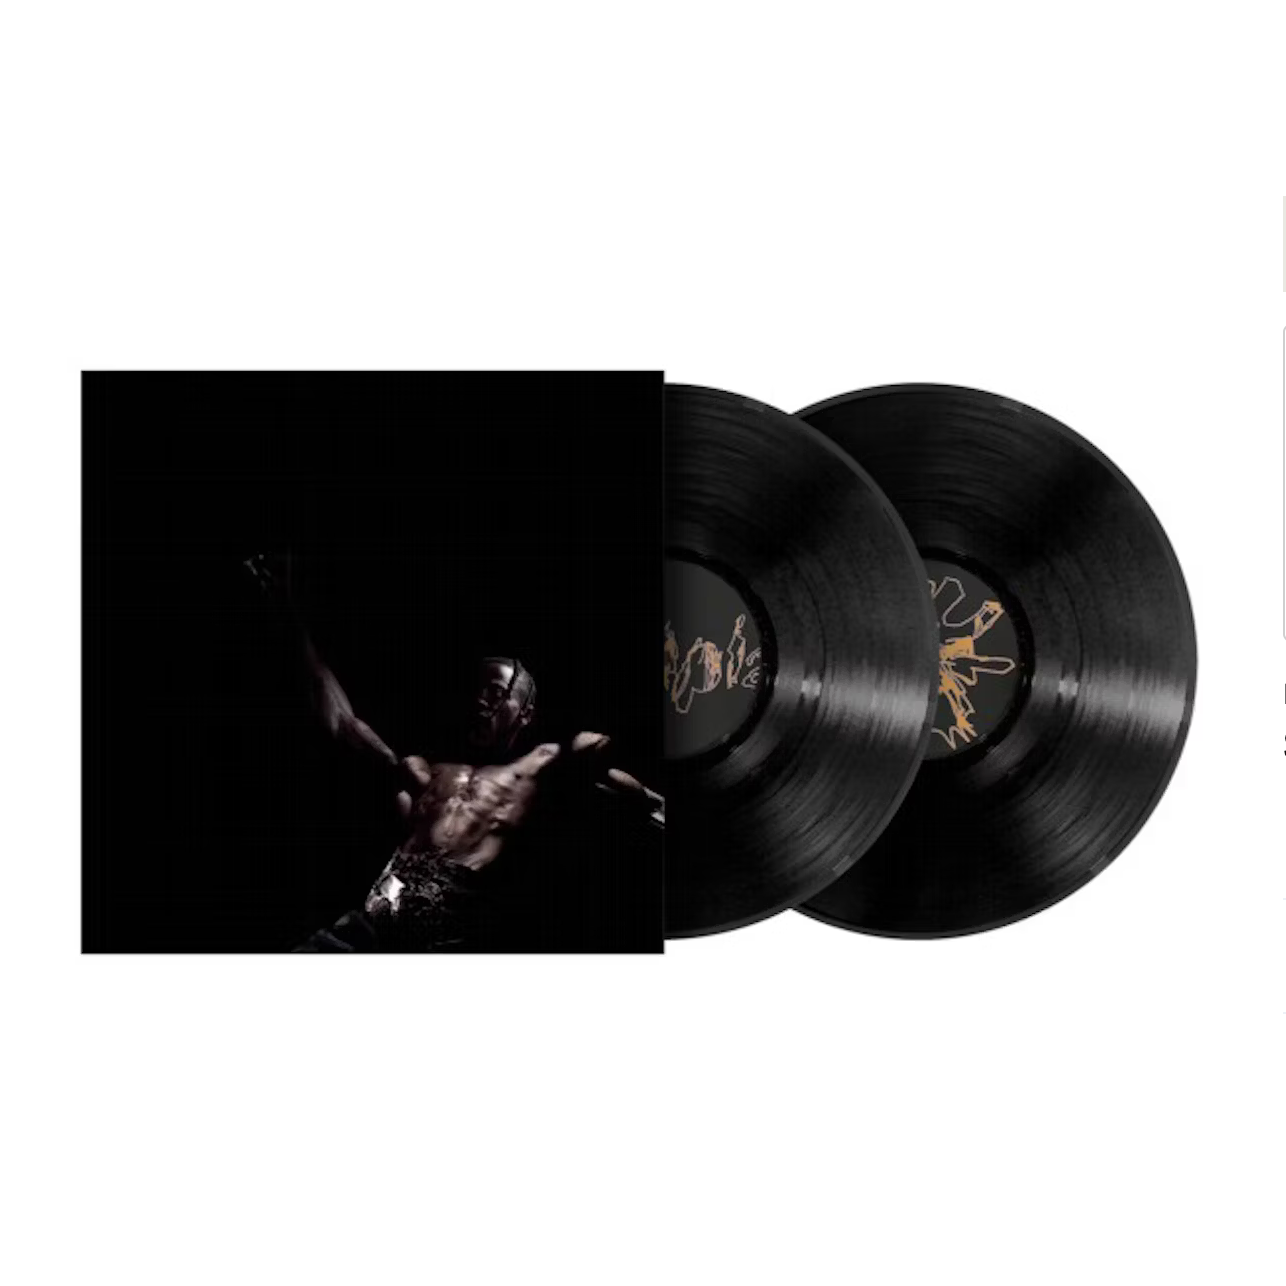 Travis Scott - UTOPIA 2 DISK VINYL LP COVER 1 (First Edition)